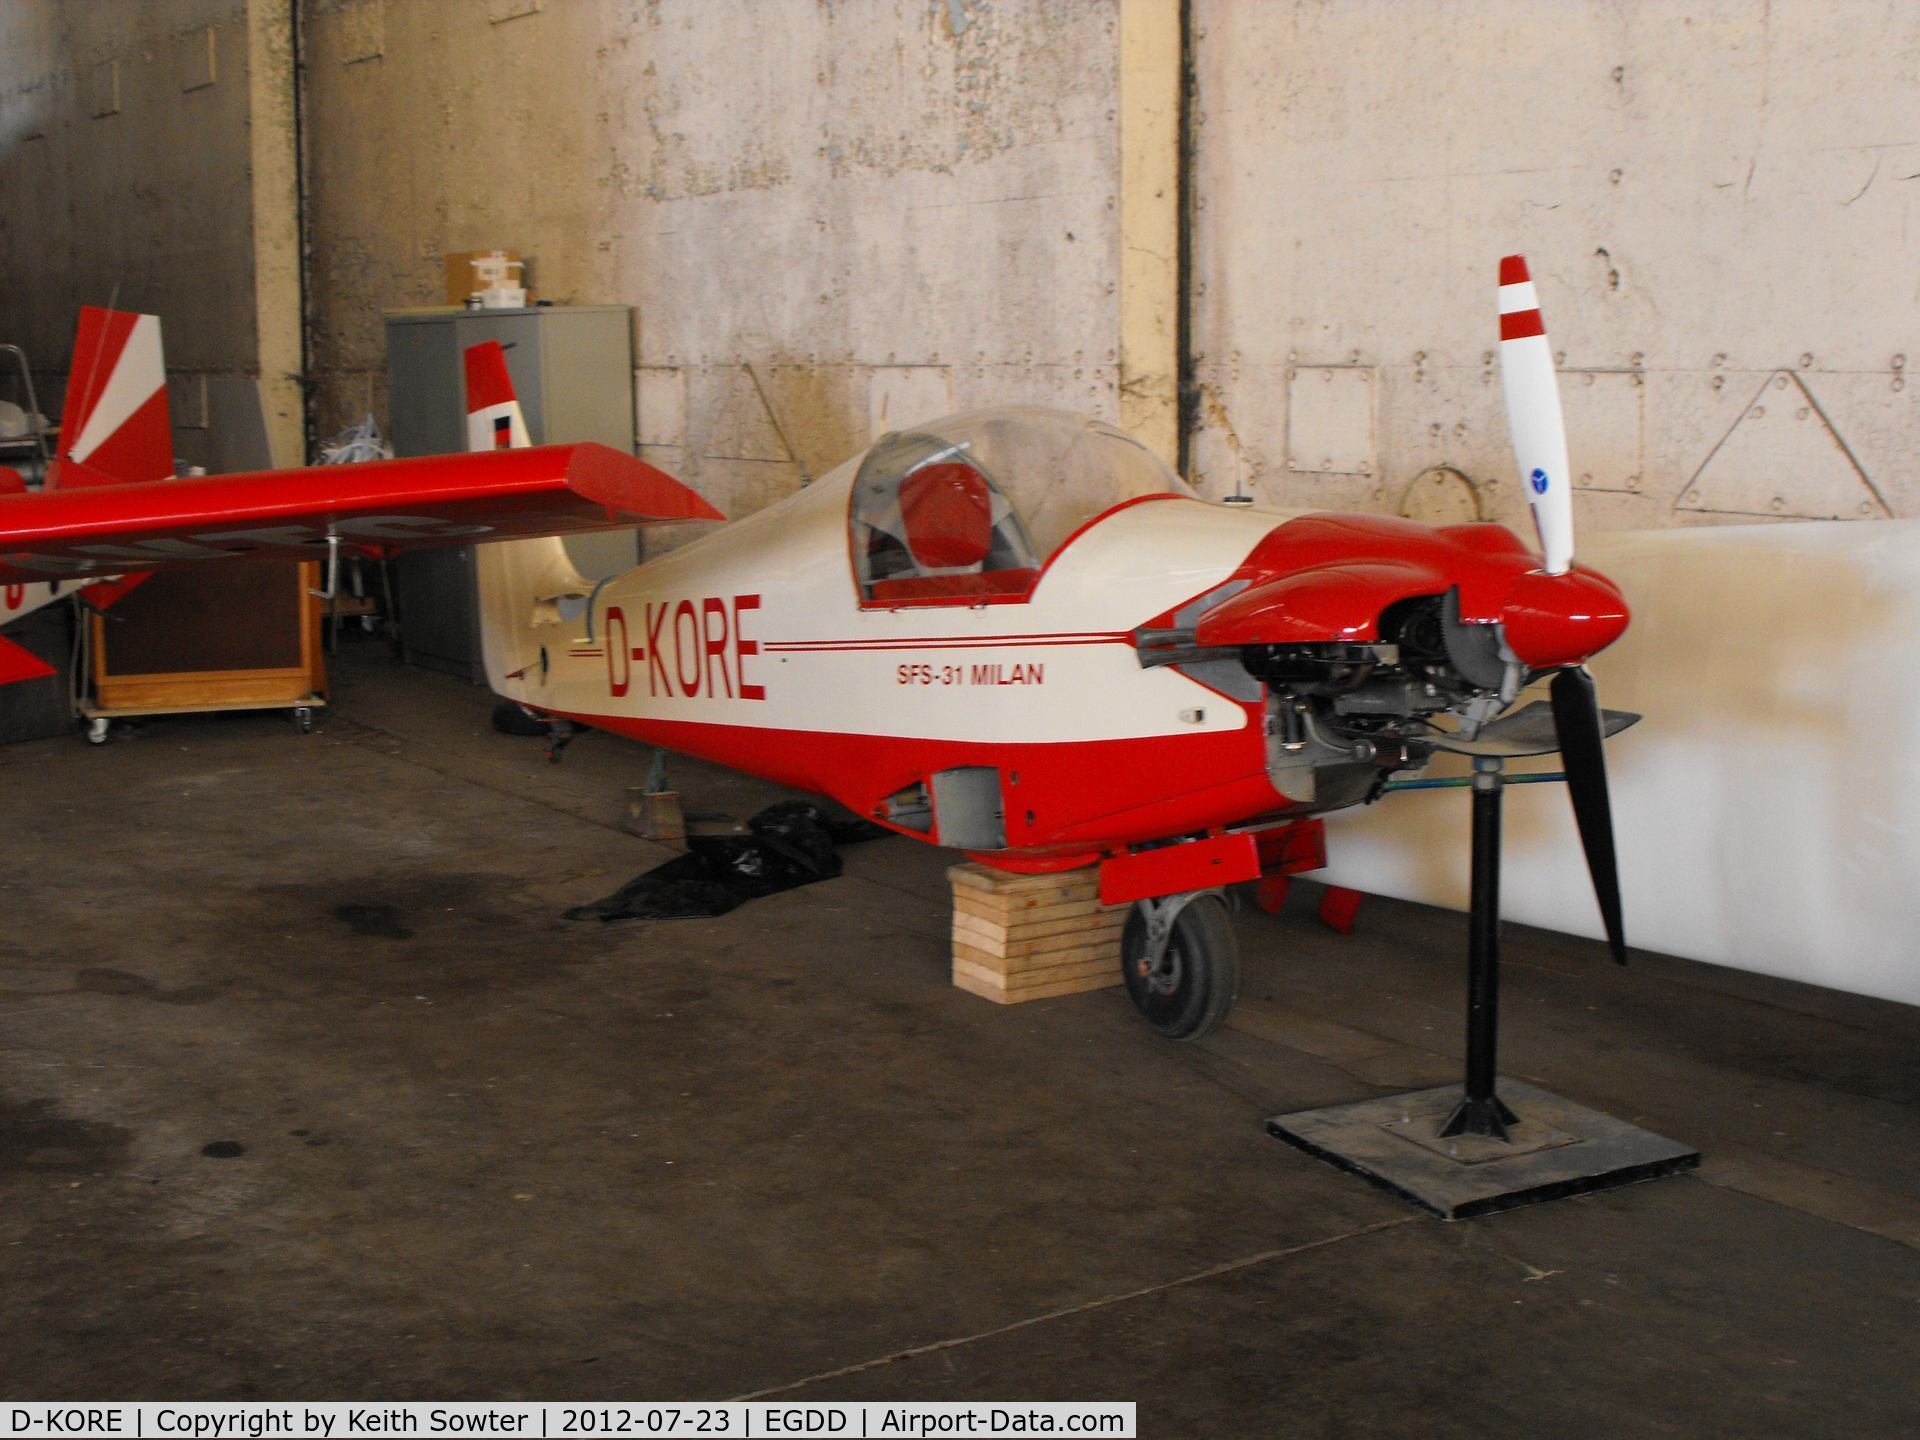 D-KORE, Sportavia-Putzer SFS-31 Milan C/N 6601, Resident Glider